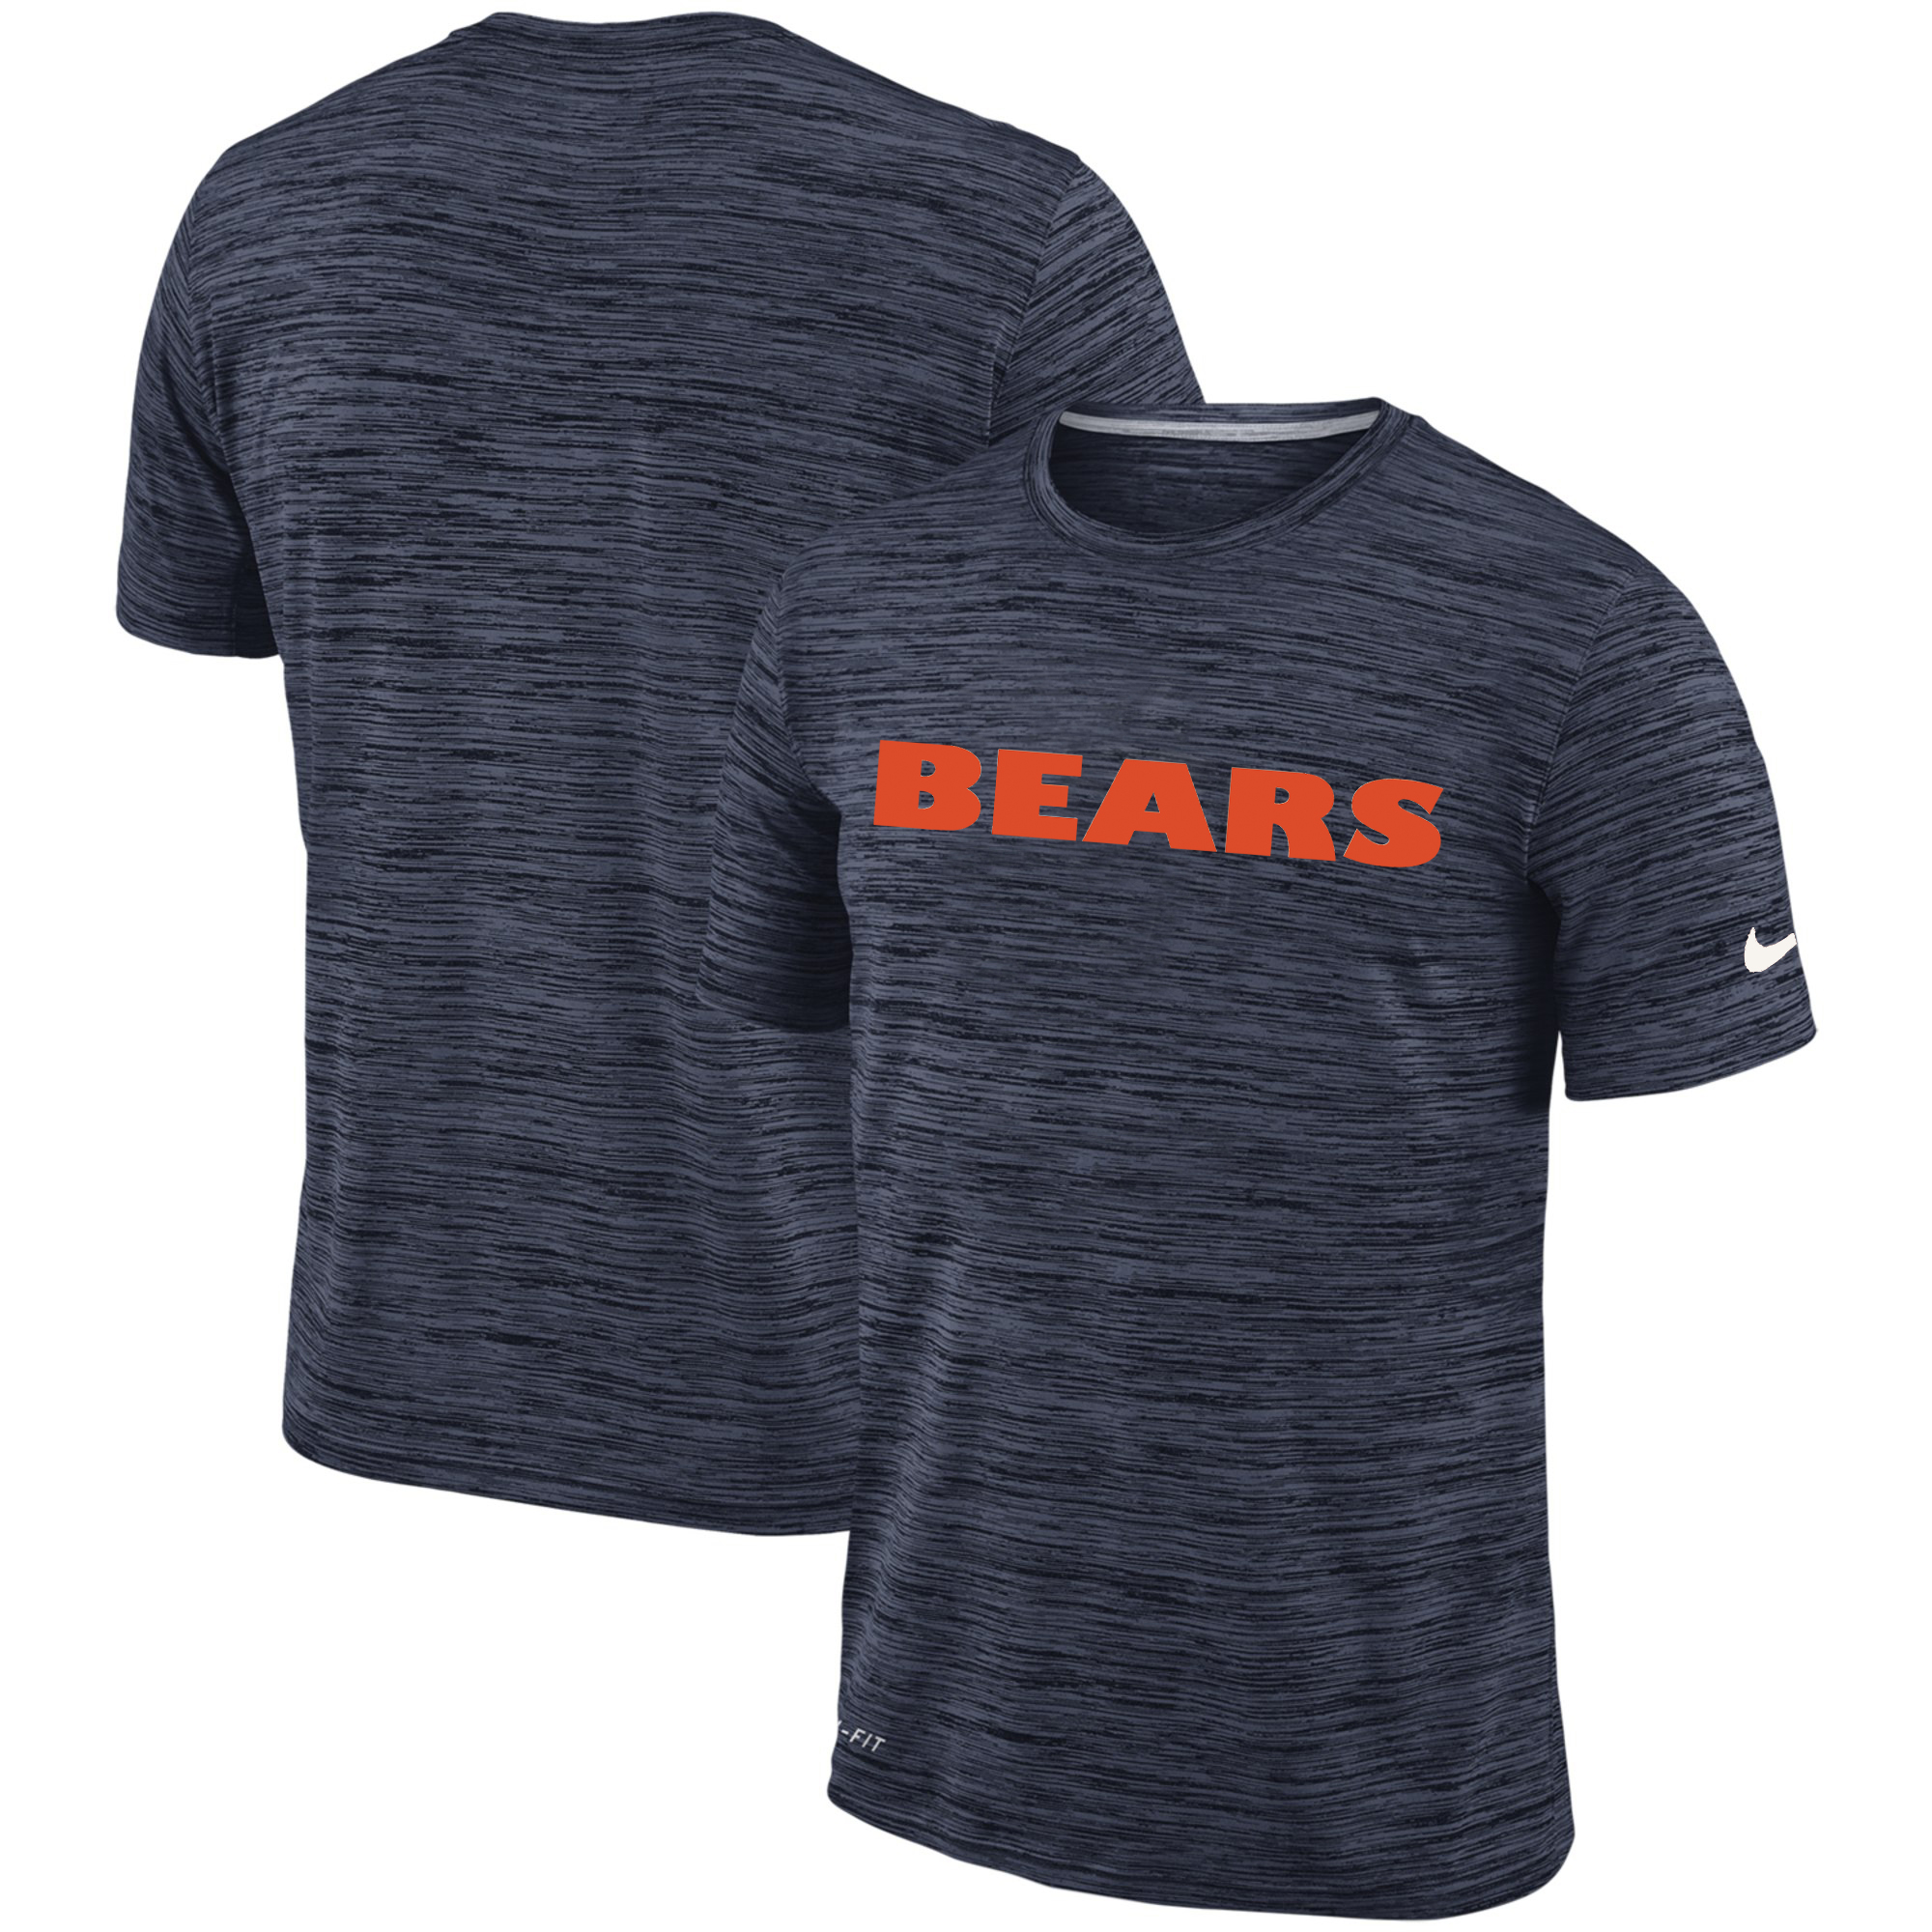 Men's Chicago Bears Nike Navy Velocity Performance T-Shirt